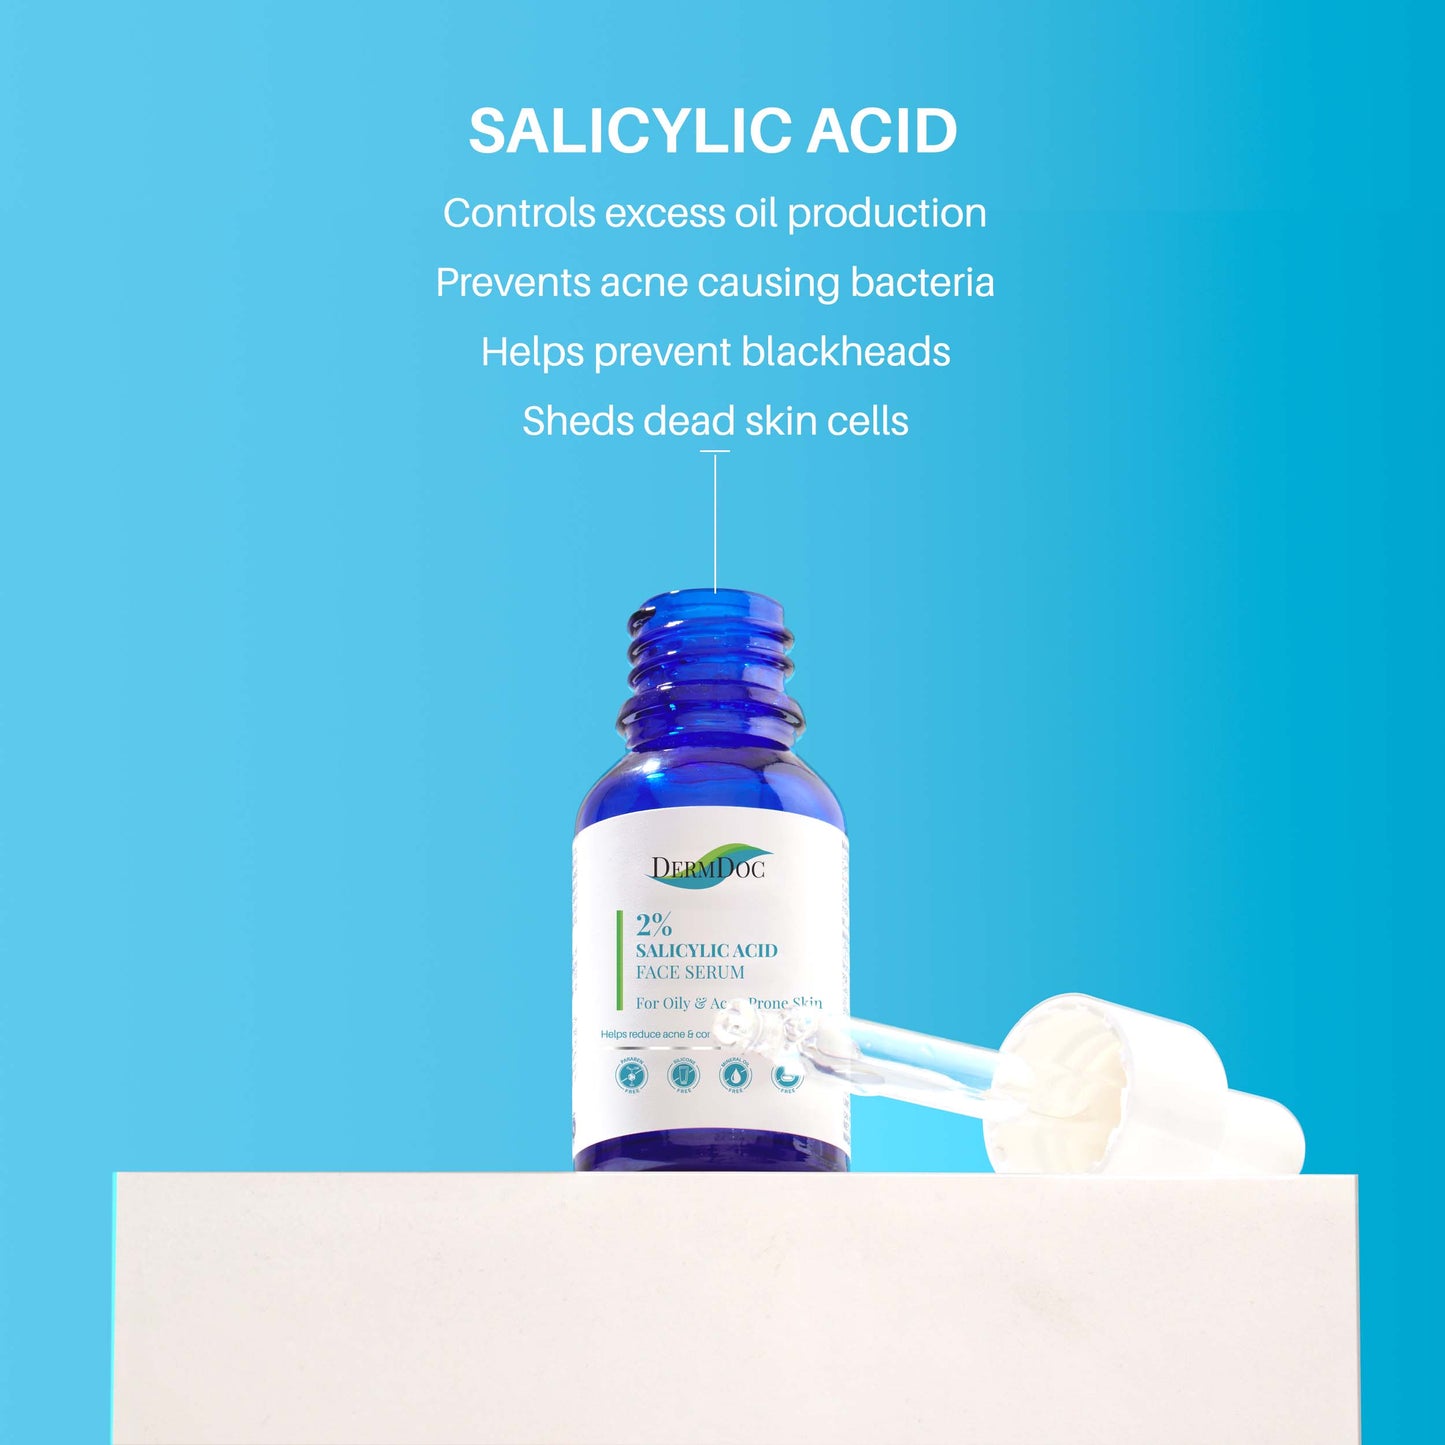 DermDoc 2% Salicylic Acid Anti Acne Face Serum (15 ml)